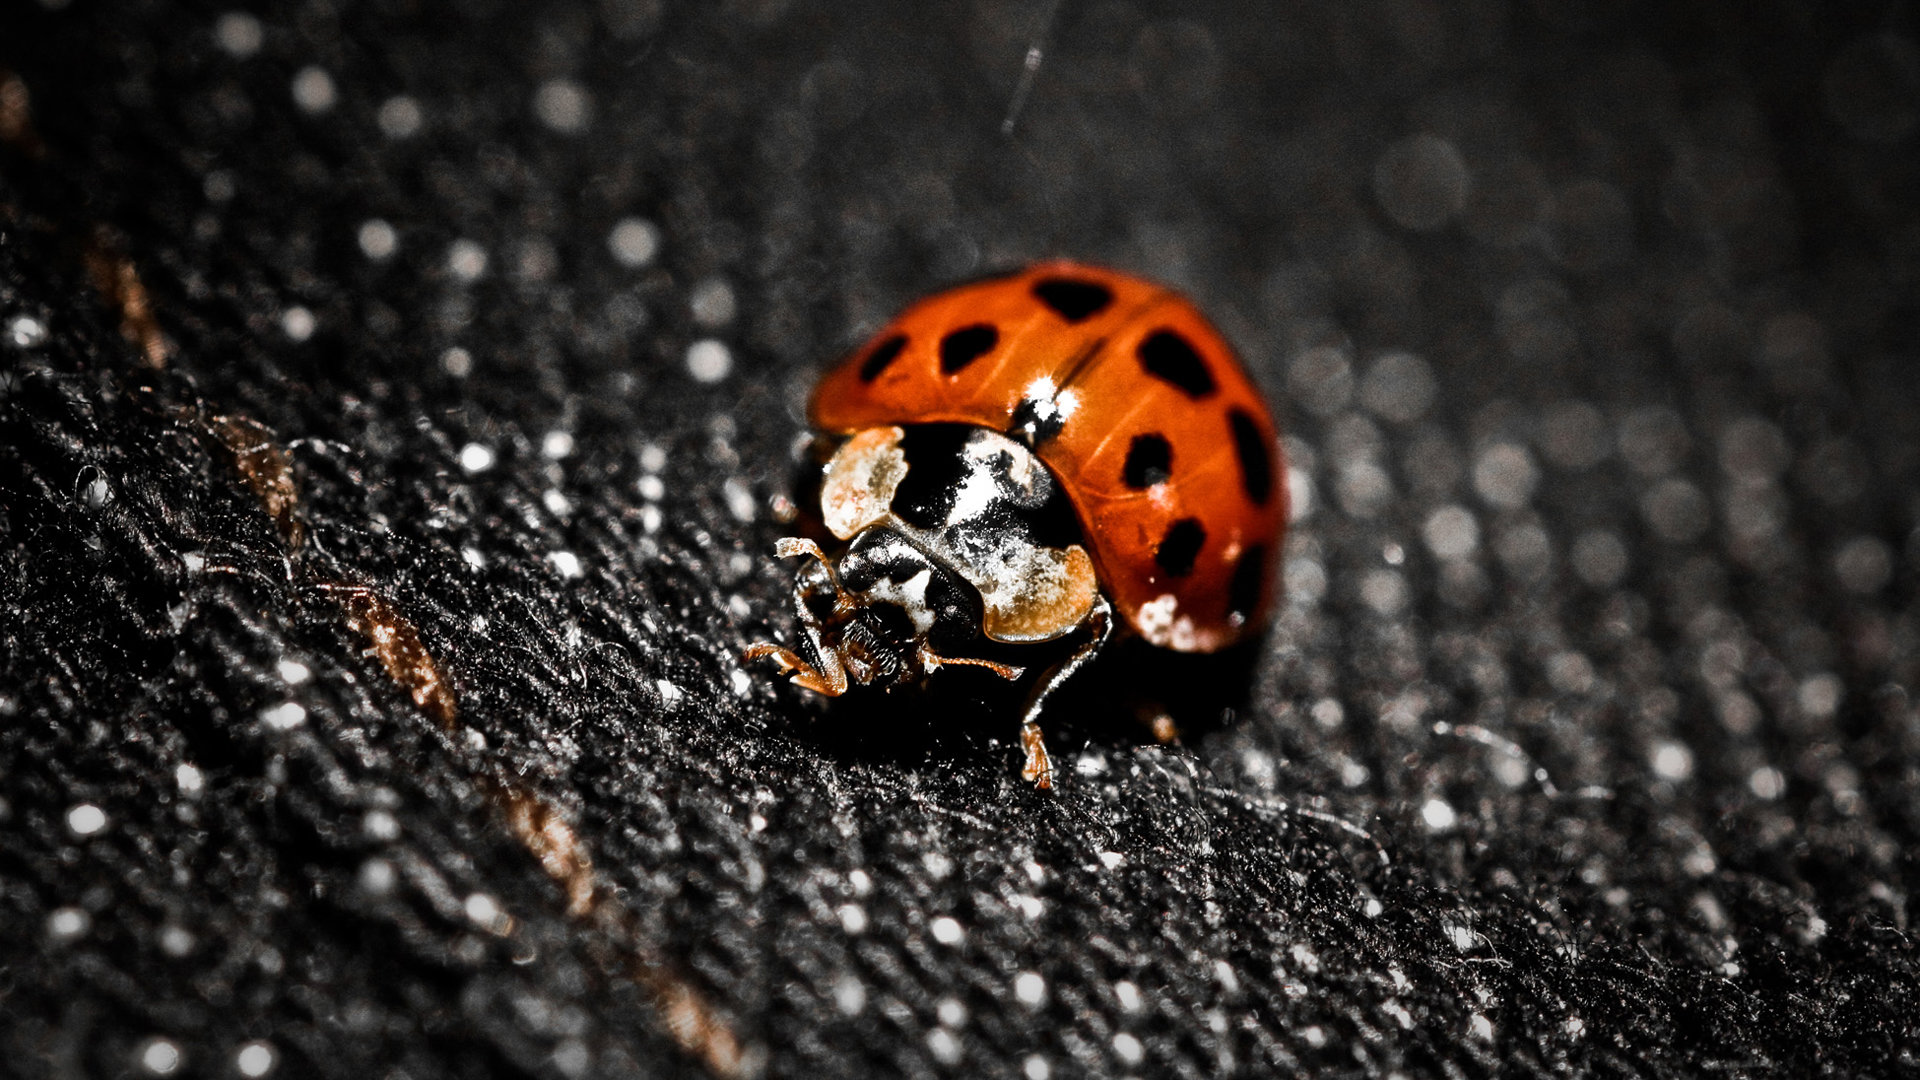 High resolution Ladybug hd 1920x1080 background ID:270325 for PC